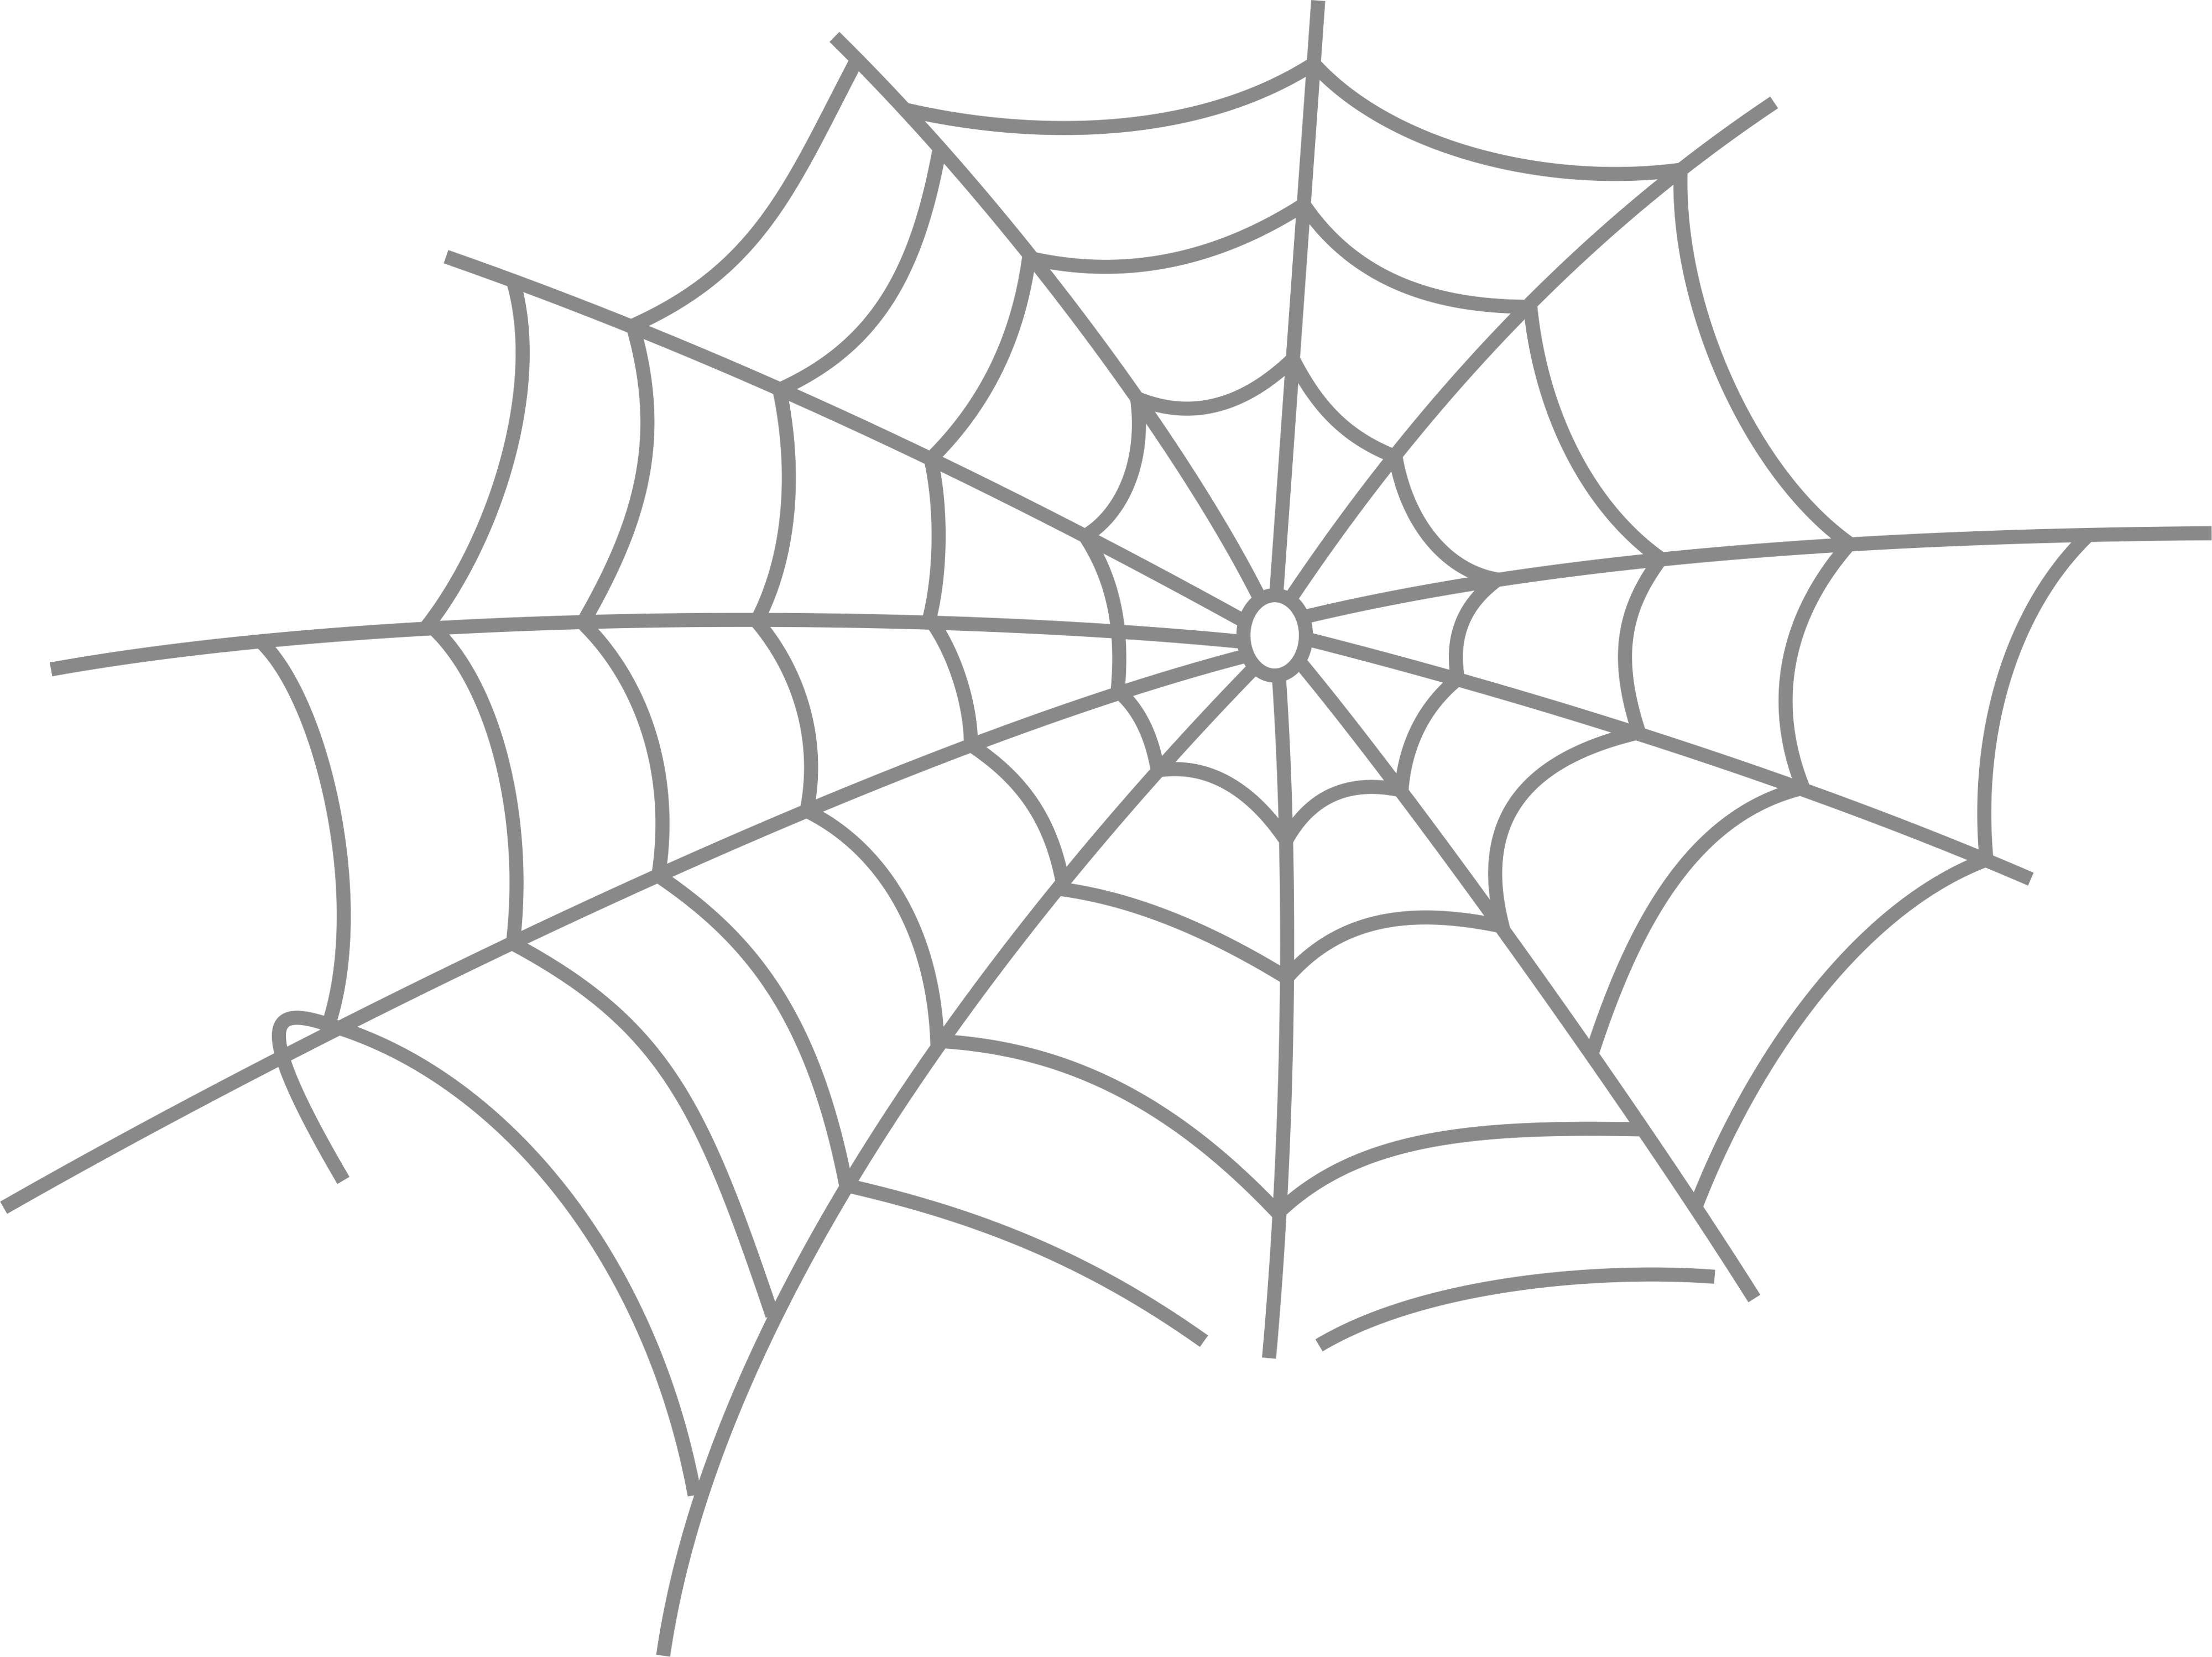 Spider Man Web Clip Art Logo Image for Free - Free Logo Image